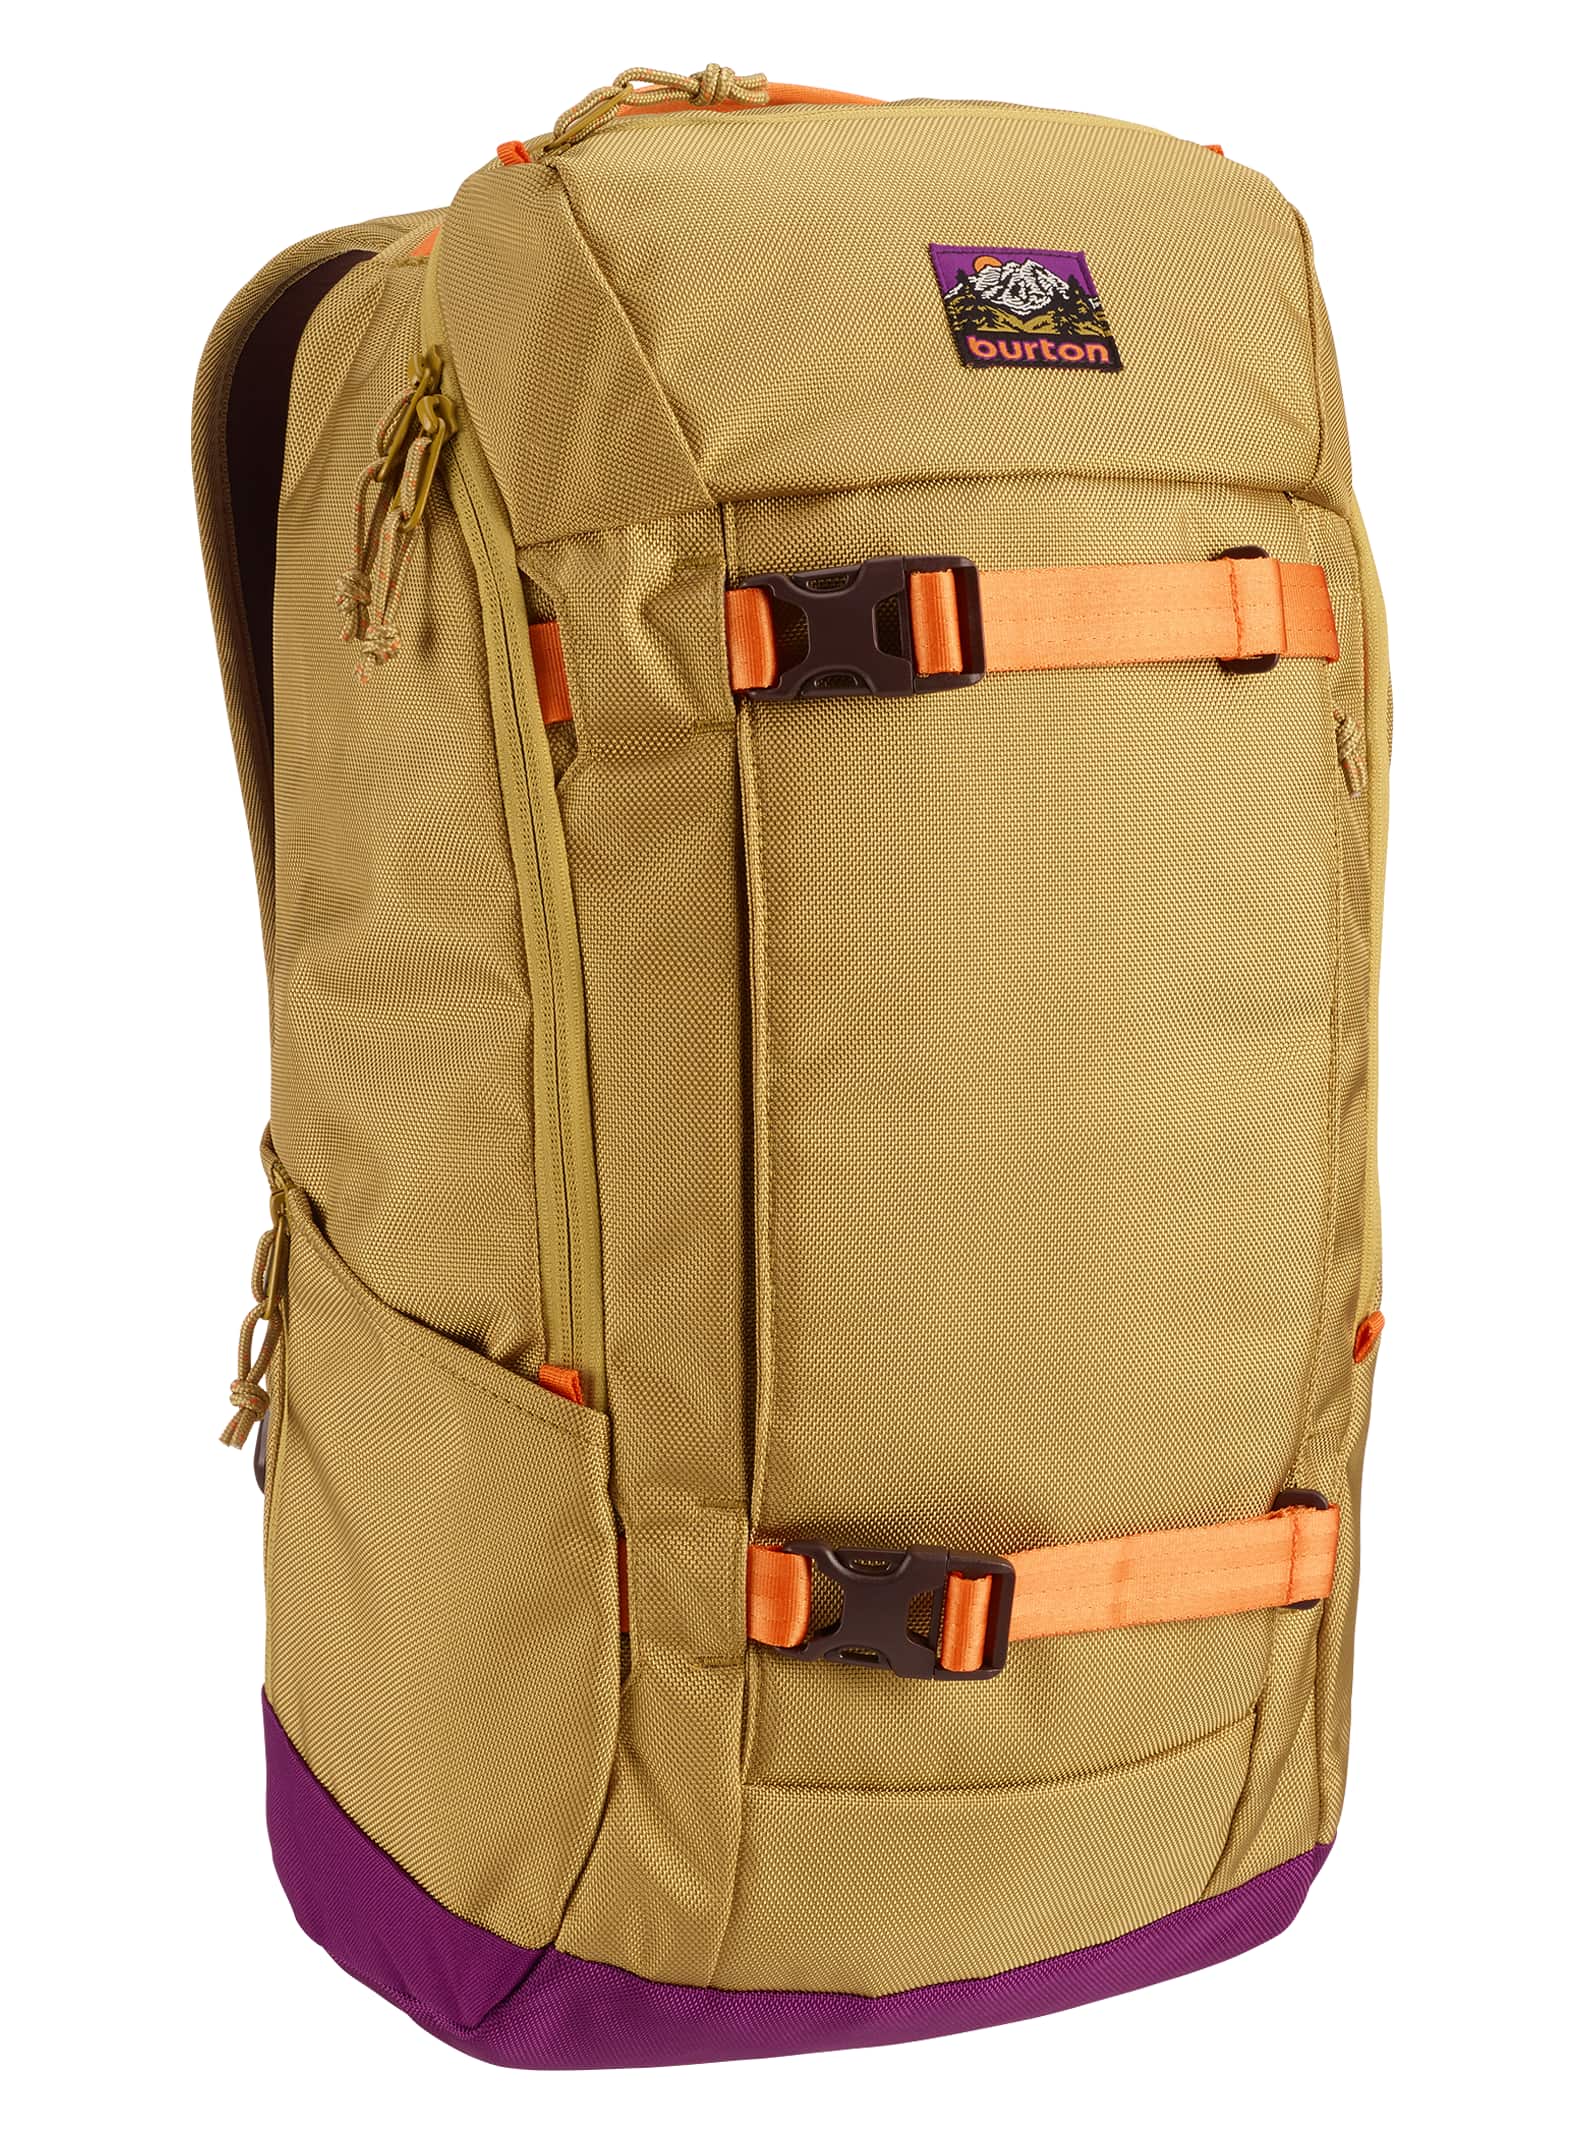 Burton Kilo 2.0 27L Backpack | Burton.com Winter 2020 US